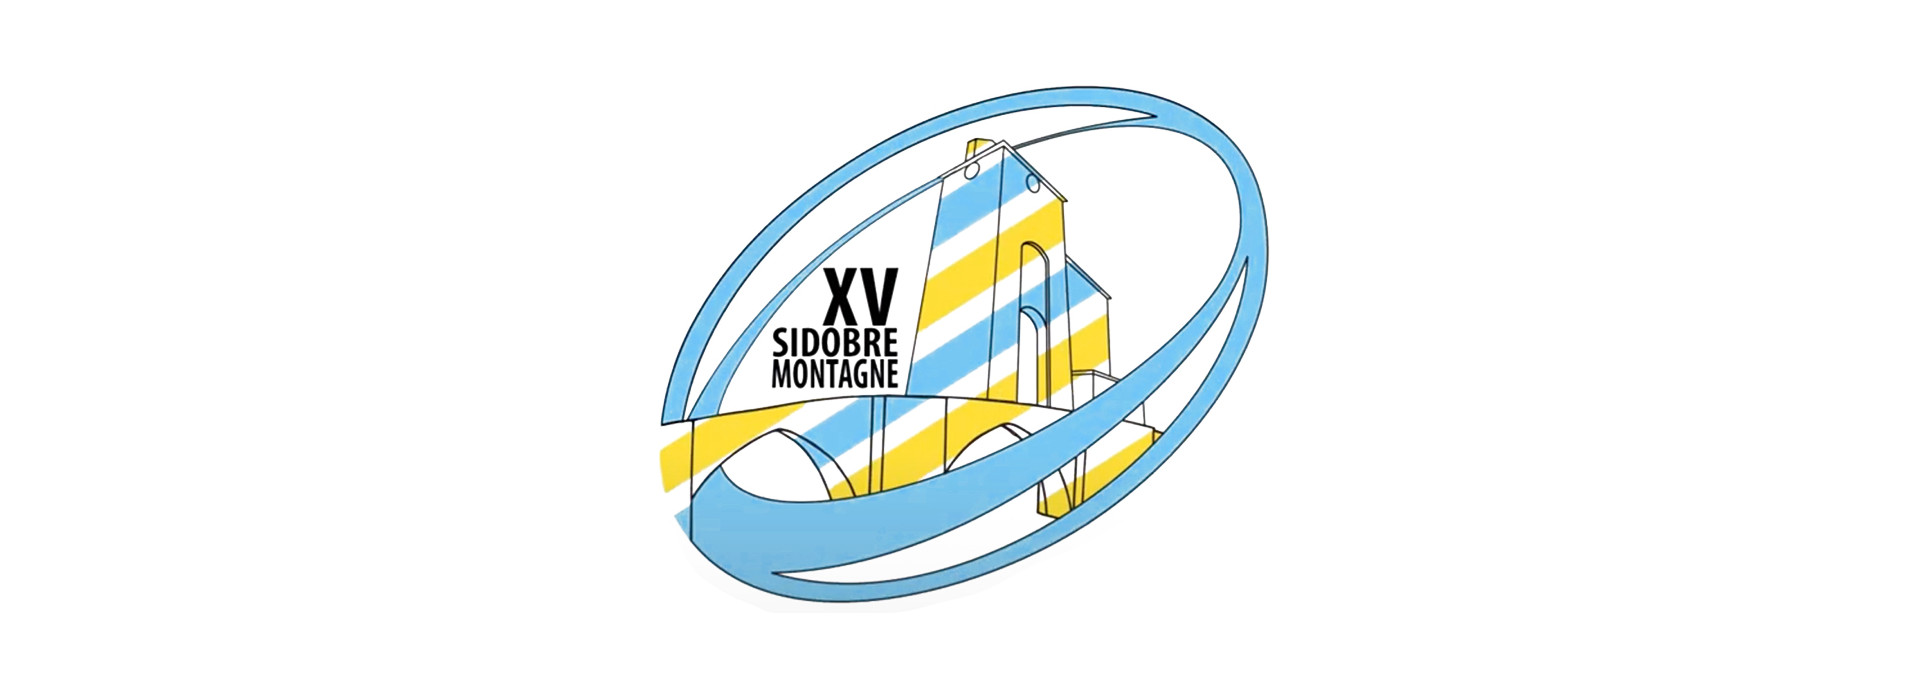 Logo sidobre montagne XV